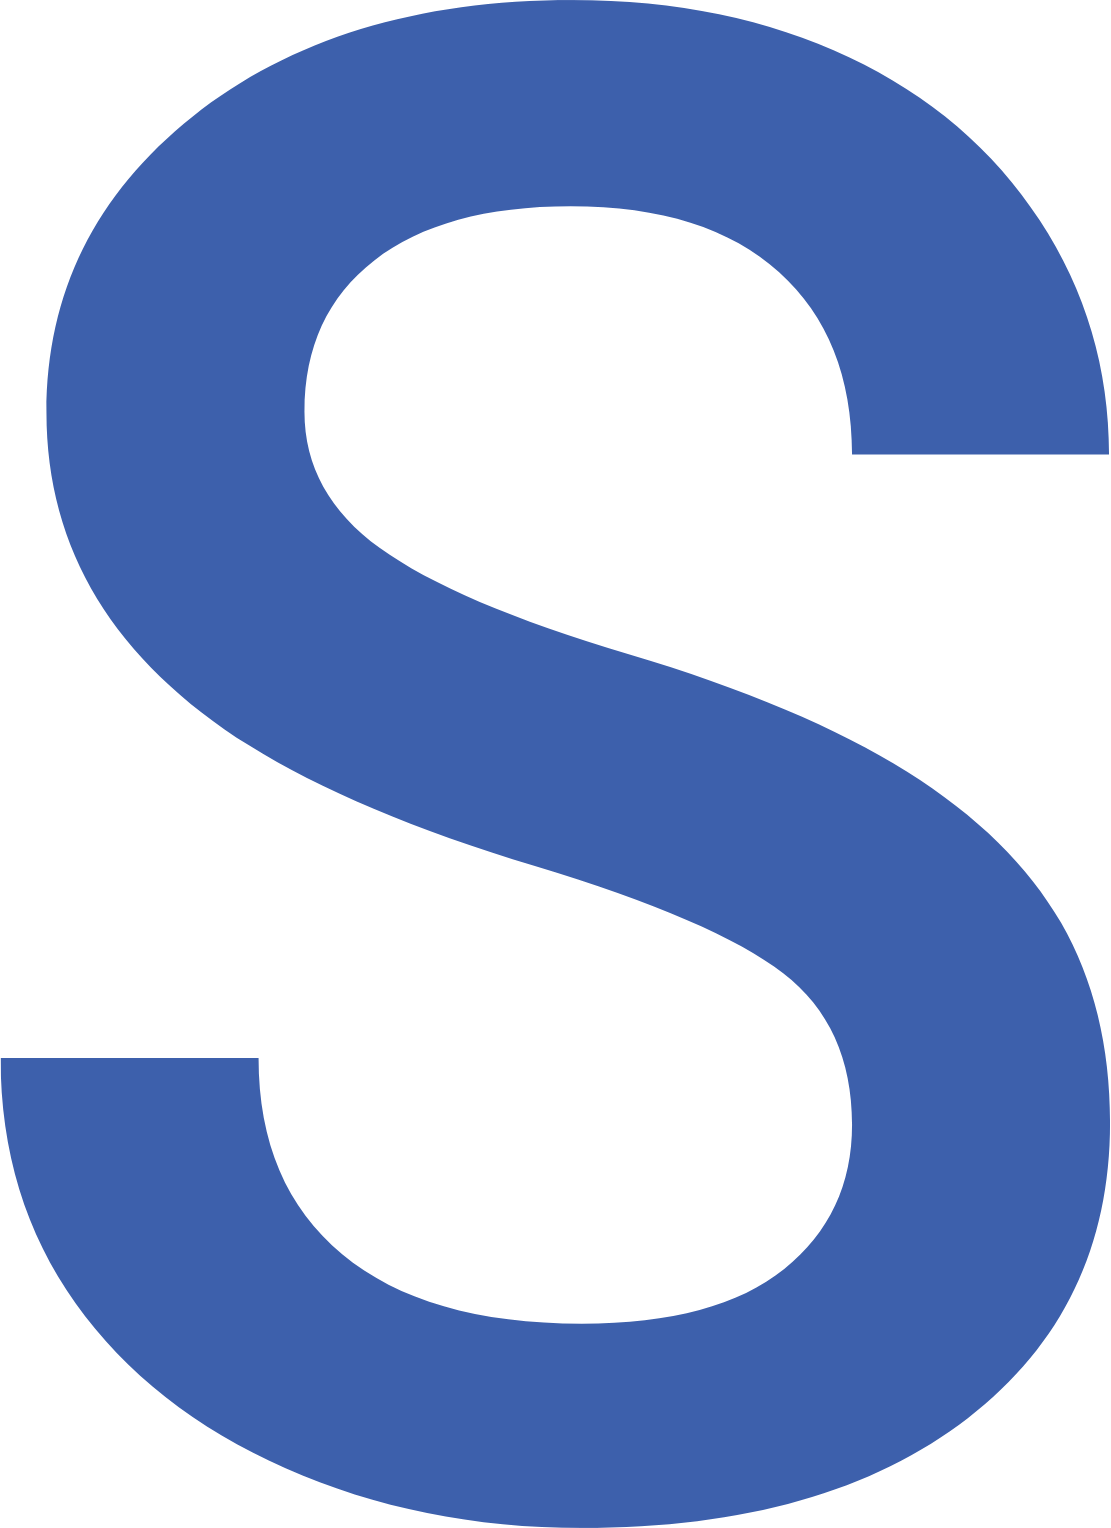 SeaChange logo (transparent PNG)